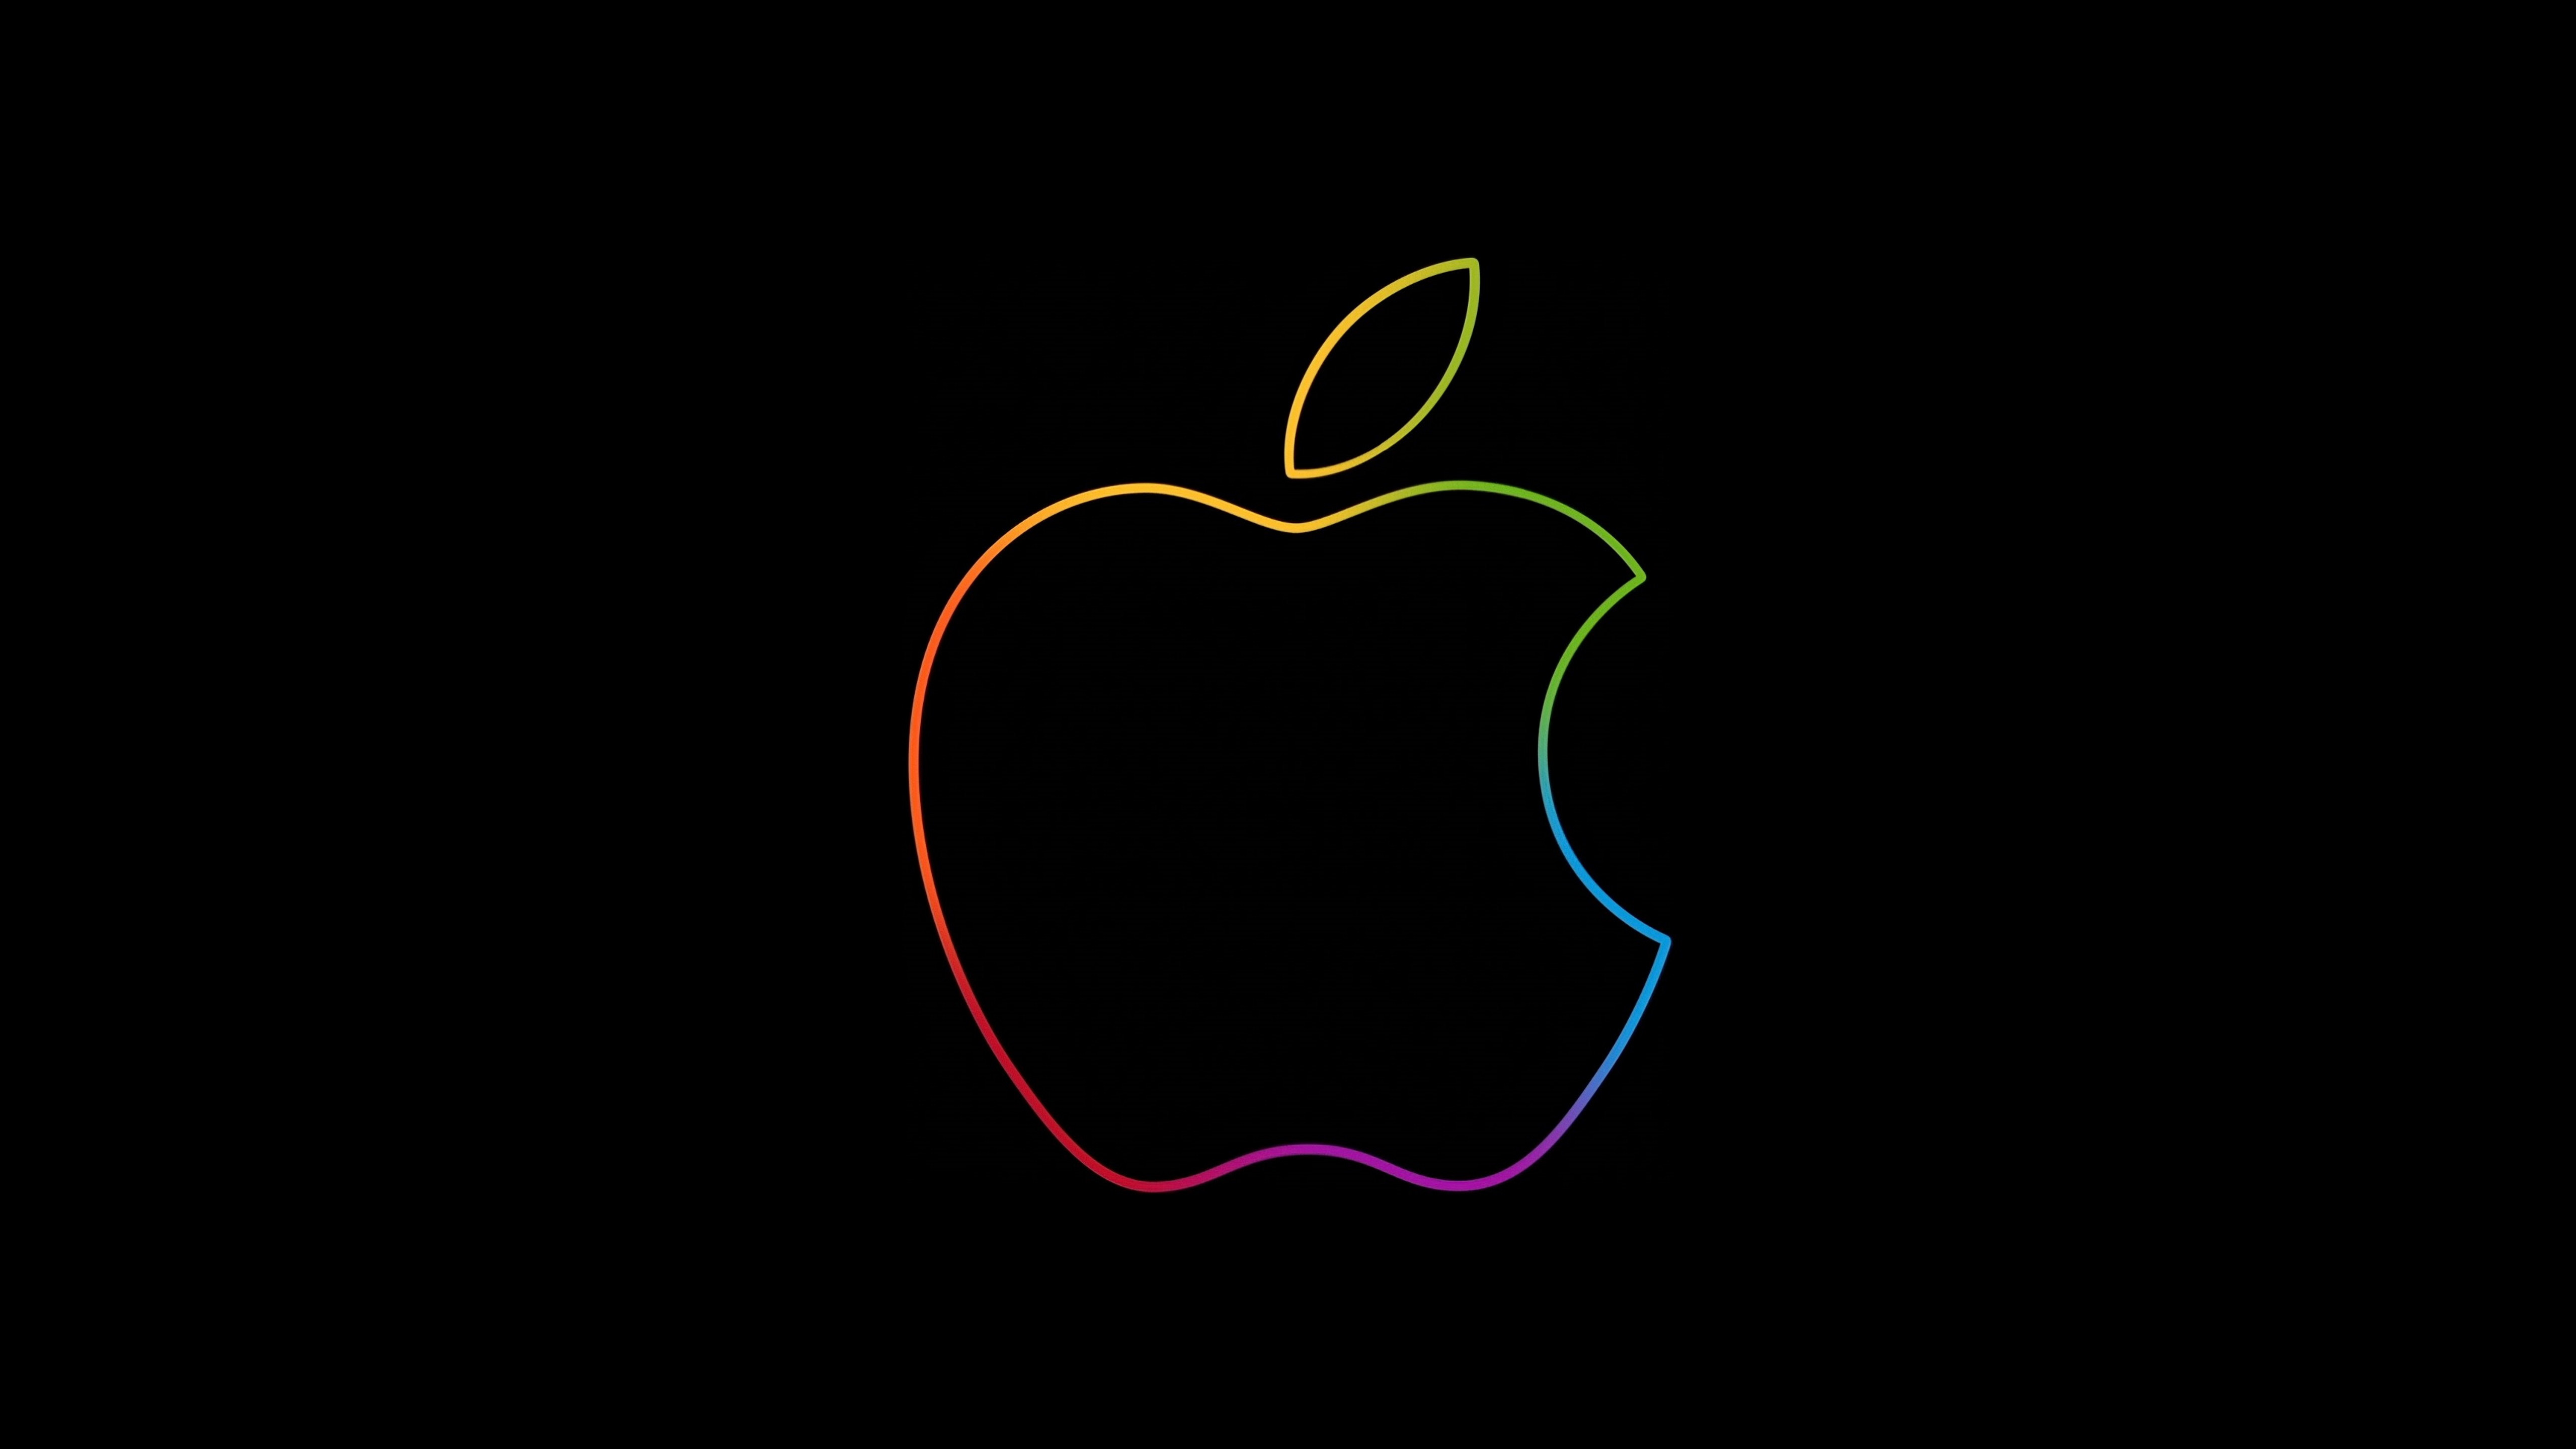 The famous Apple logo wallpaper 5120x2880